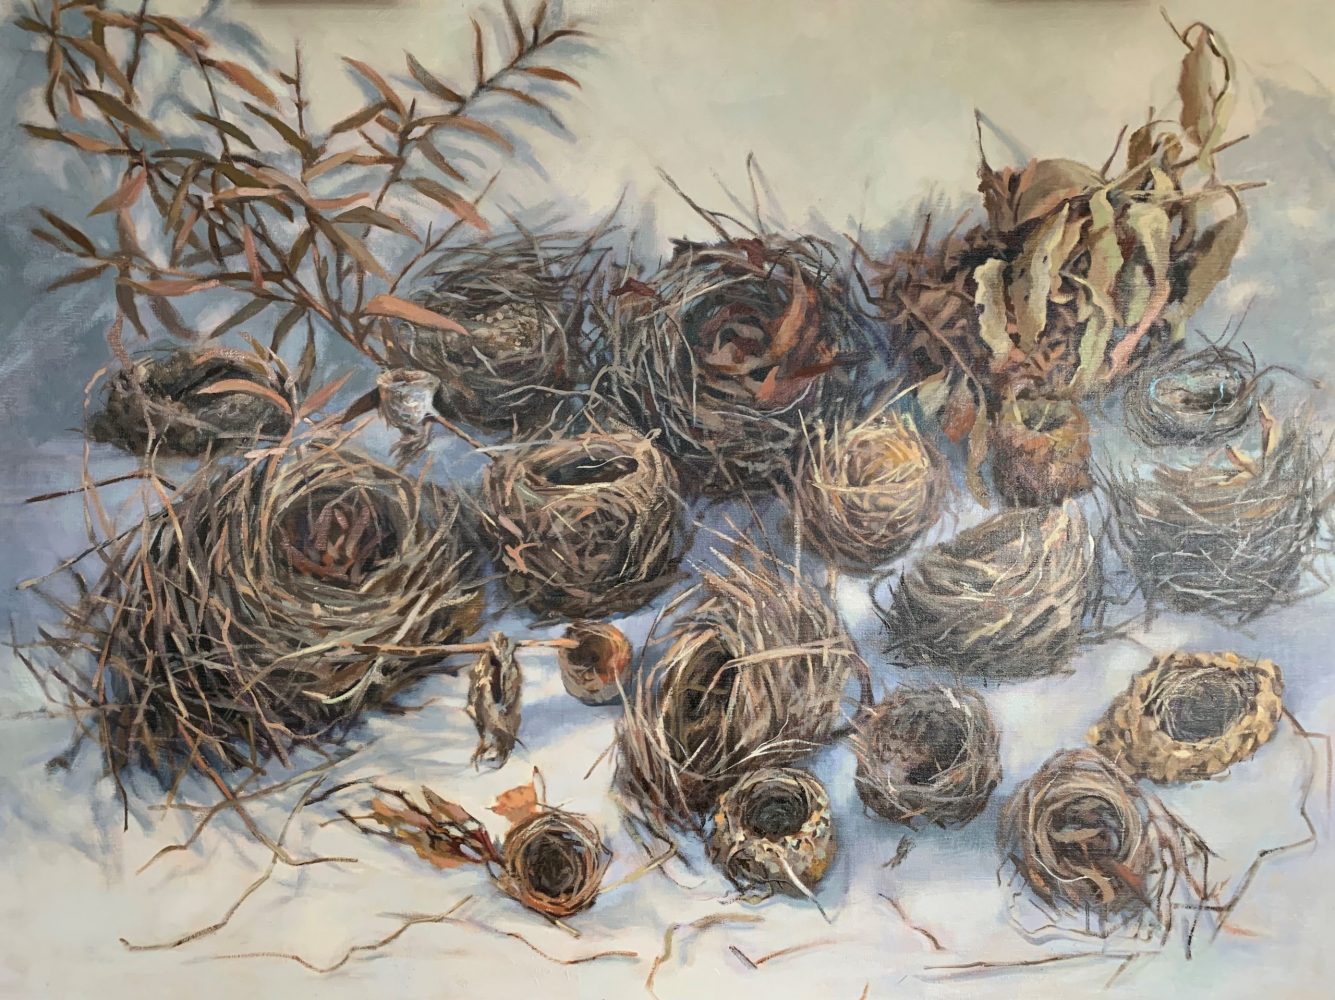 20 Nests Habitat 100